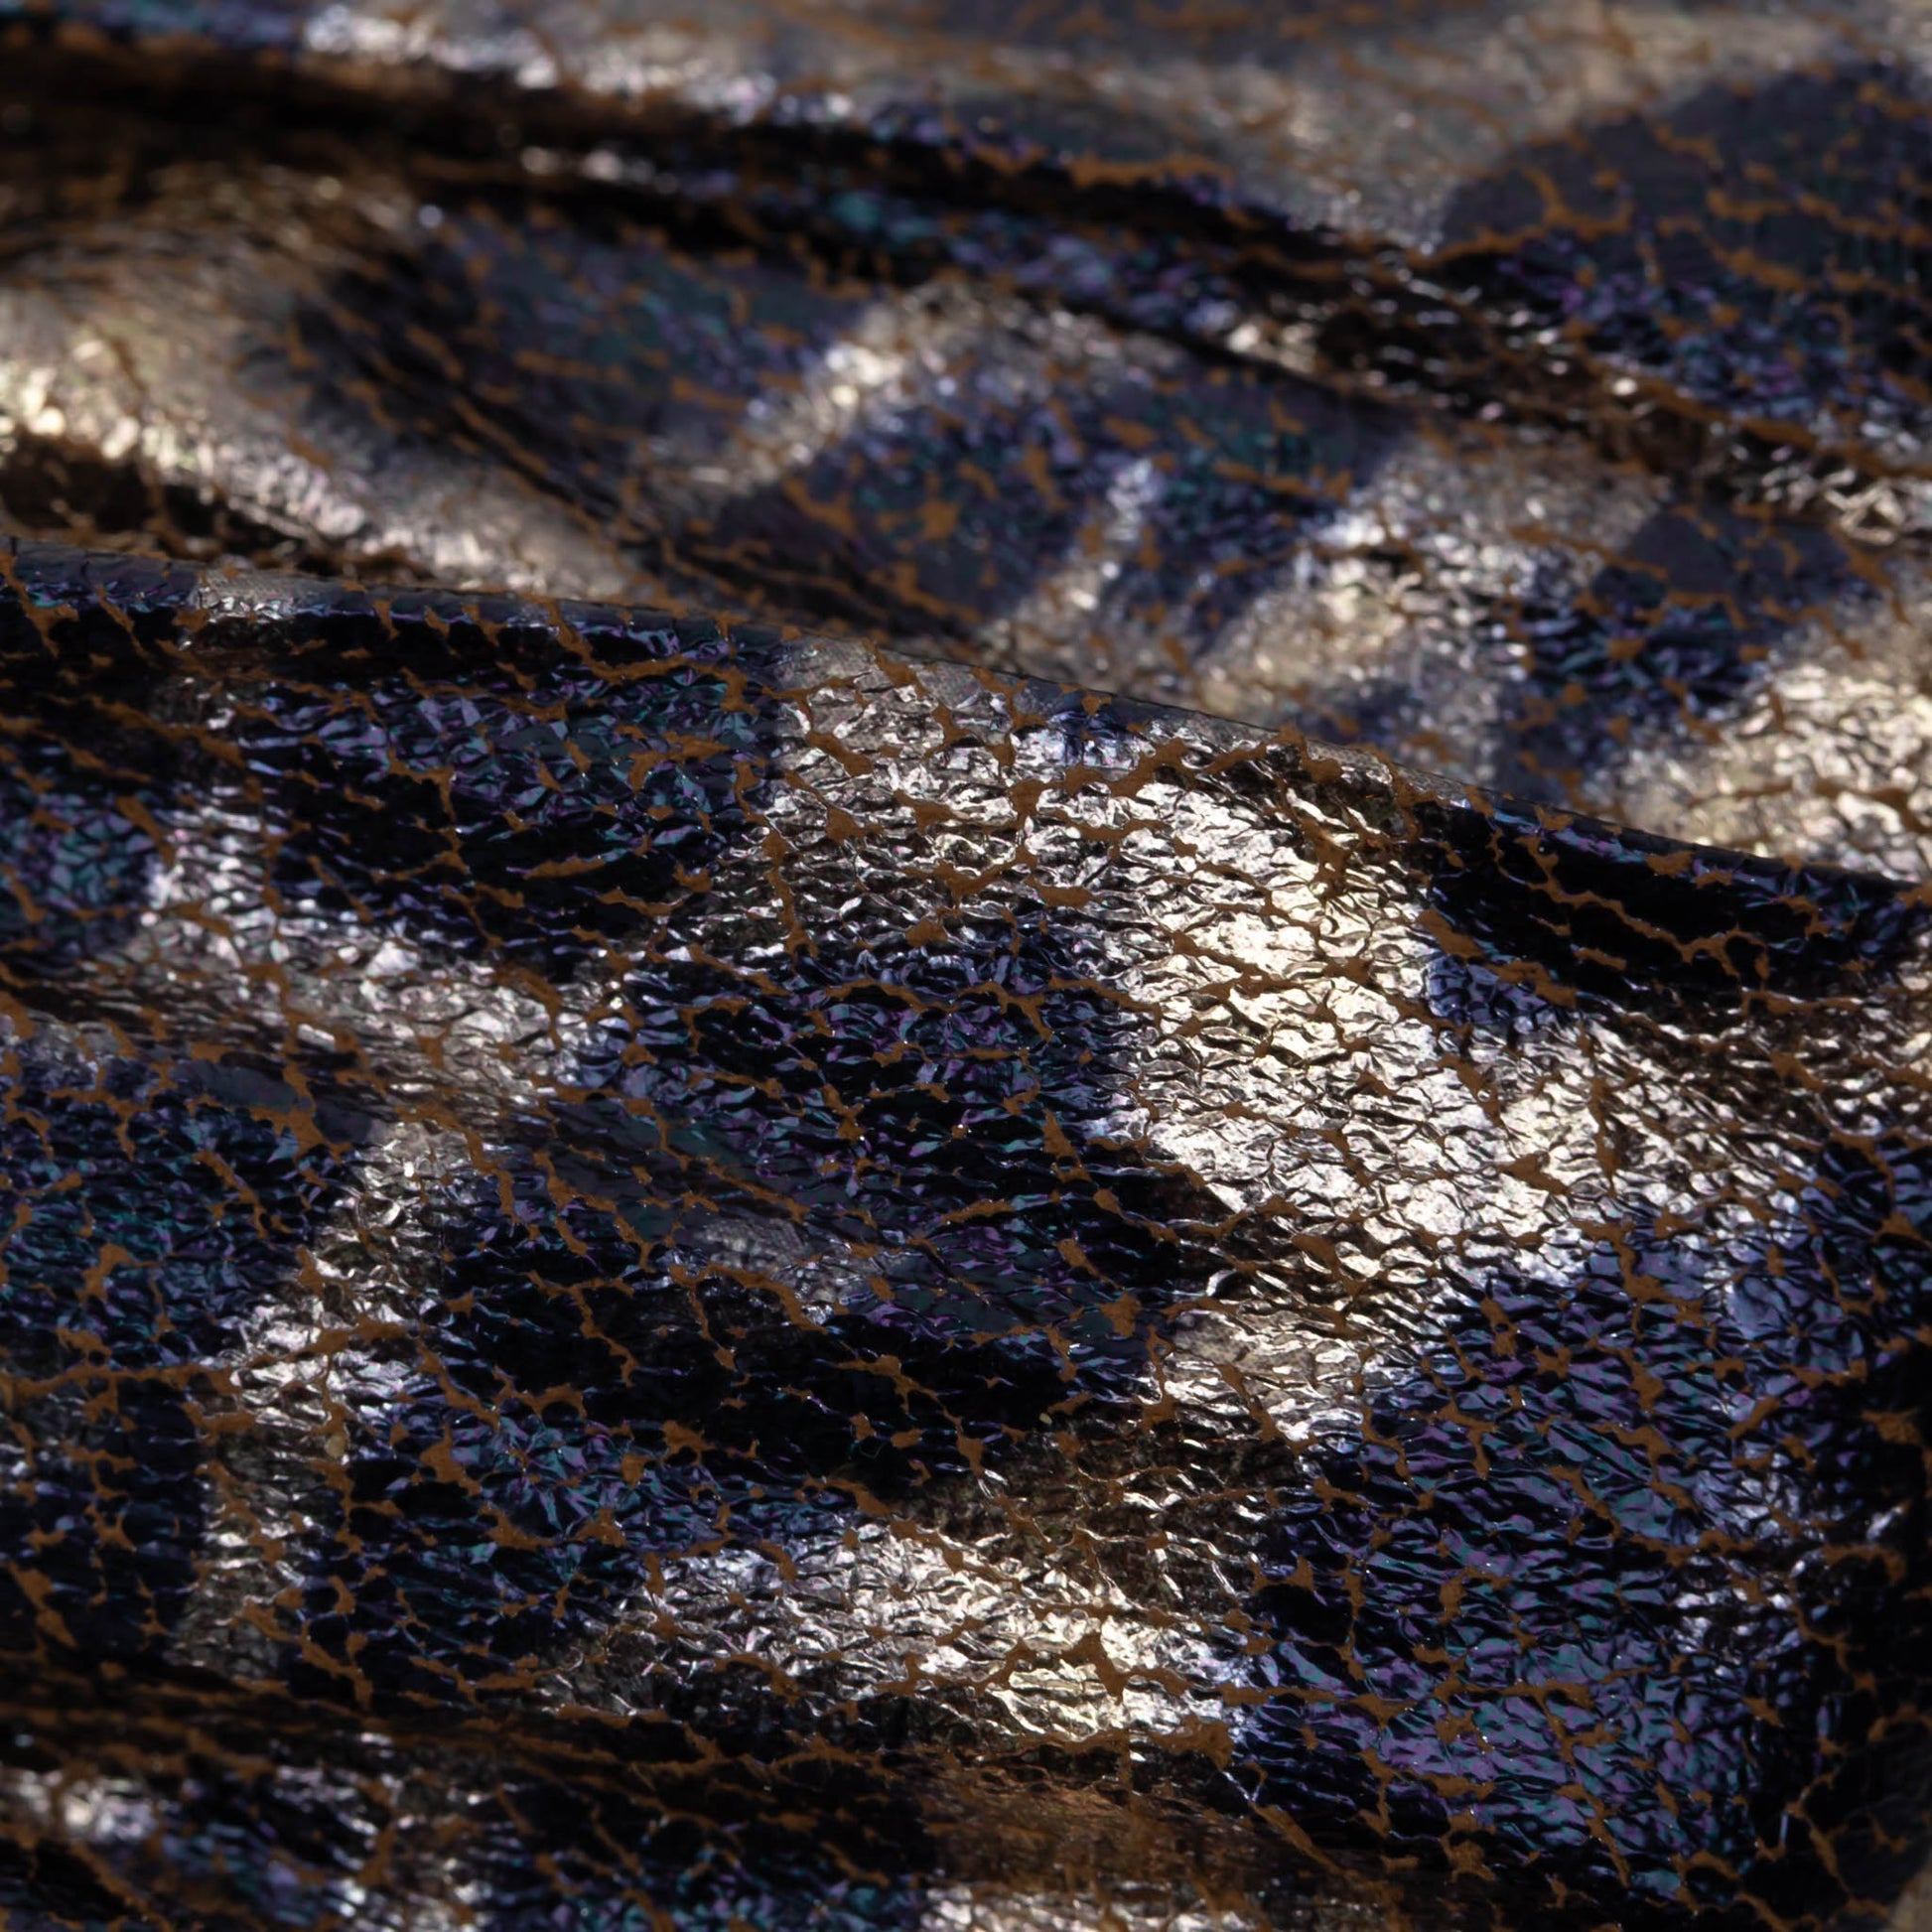 Bentiță de păr cu nod tip turban și material texturat animal print - Arămiu